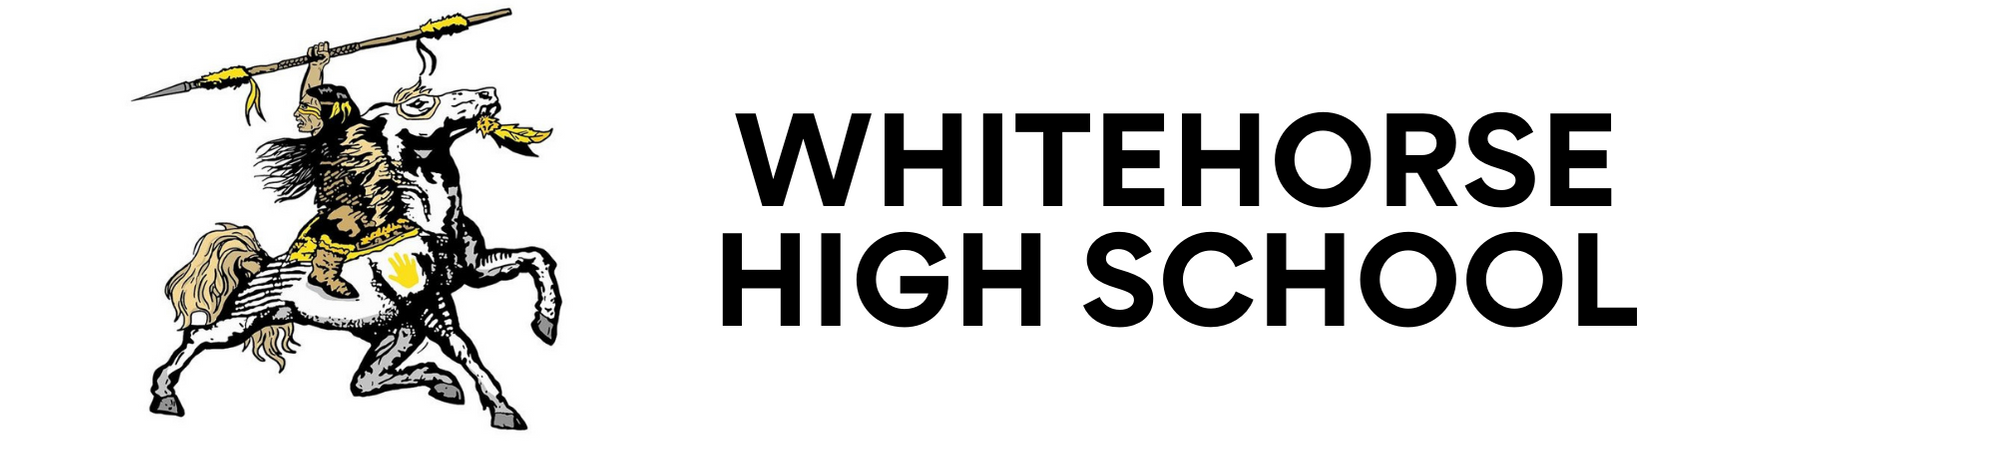 Whitehorse High School